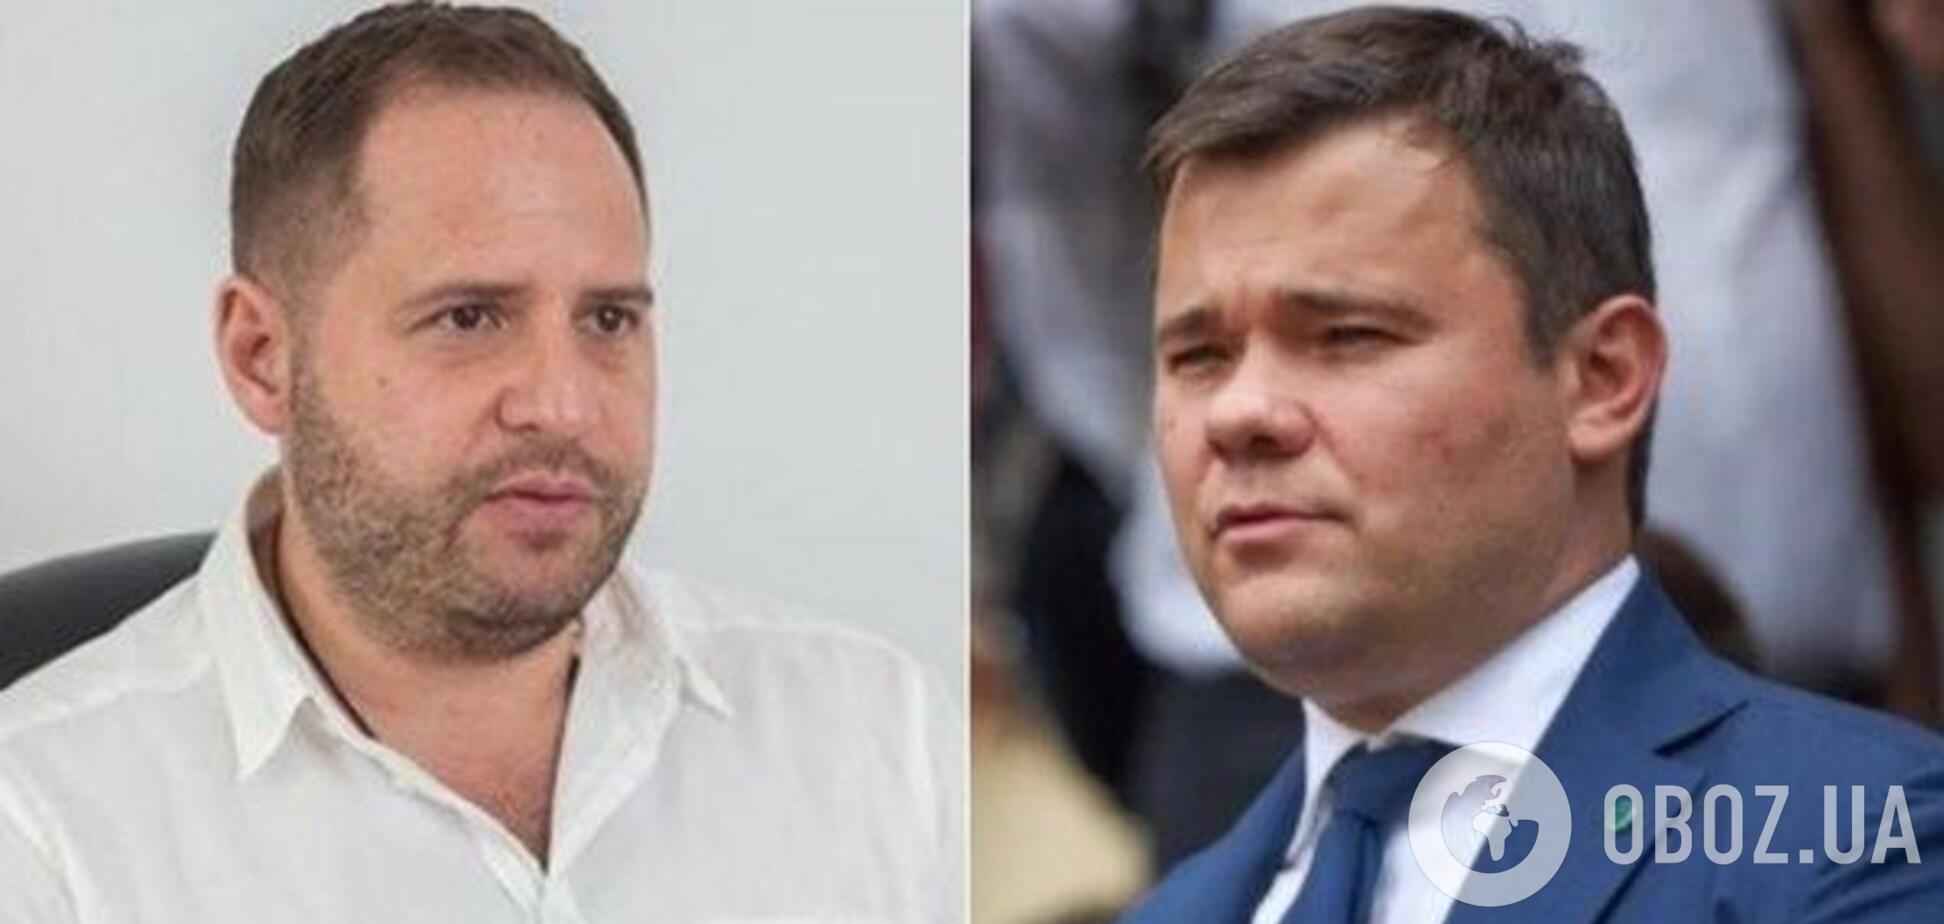 Зеленский уволил Богдана и назначил нового главу Офиса президента